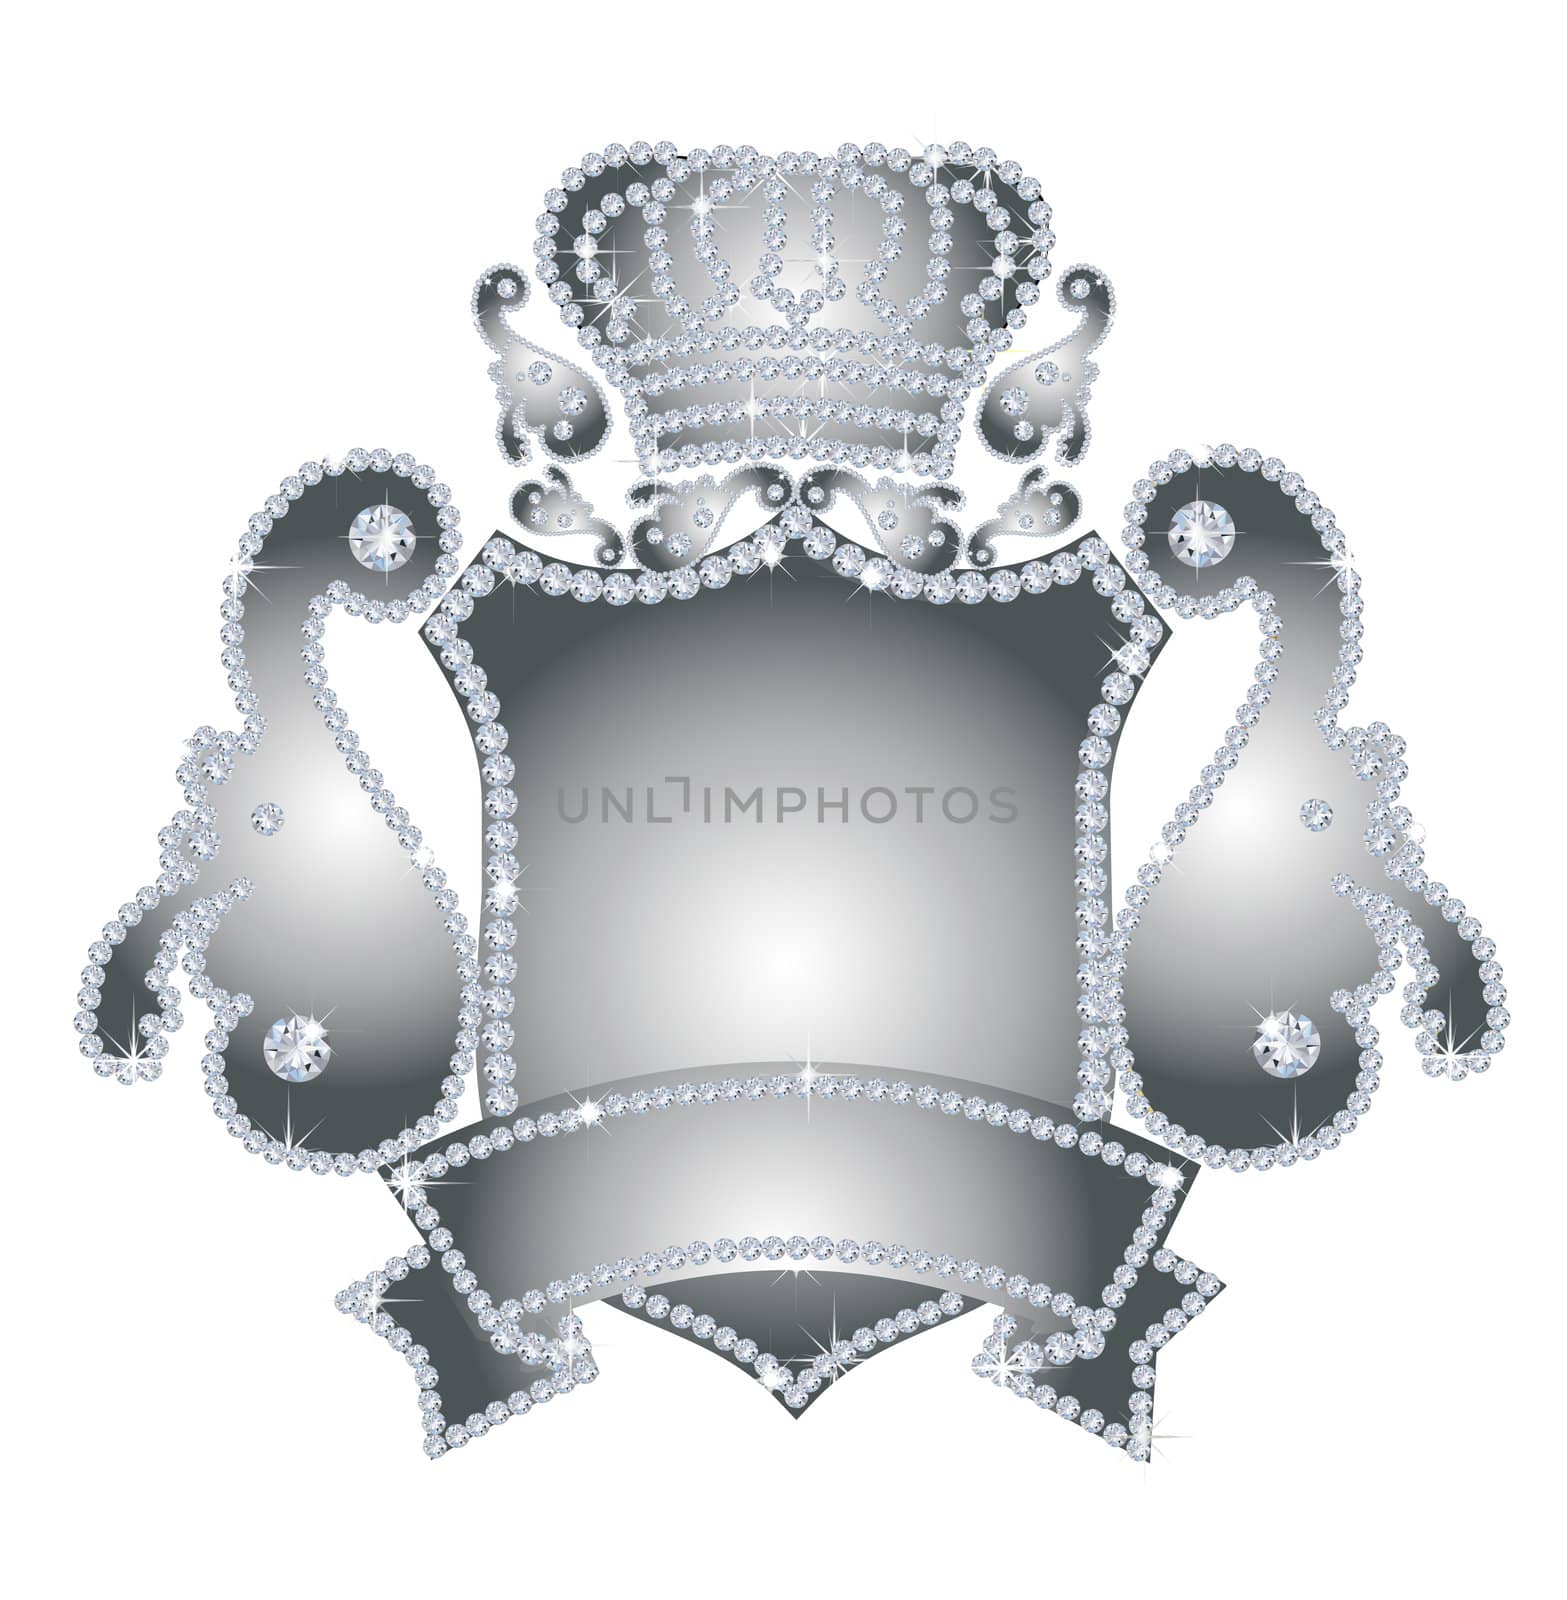 diamond crest by peromarketing